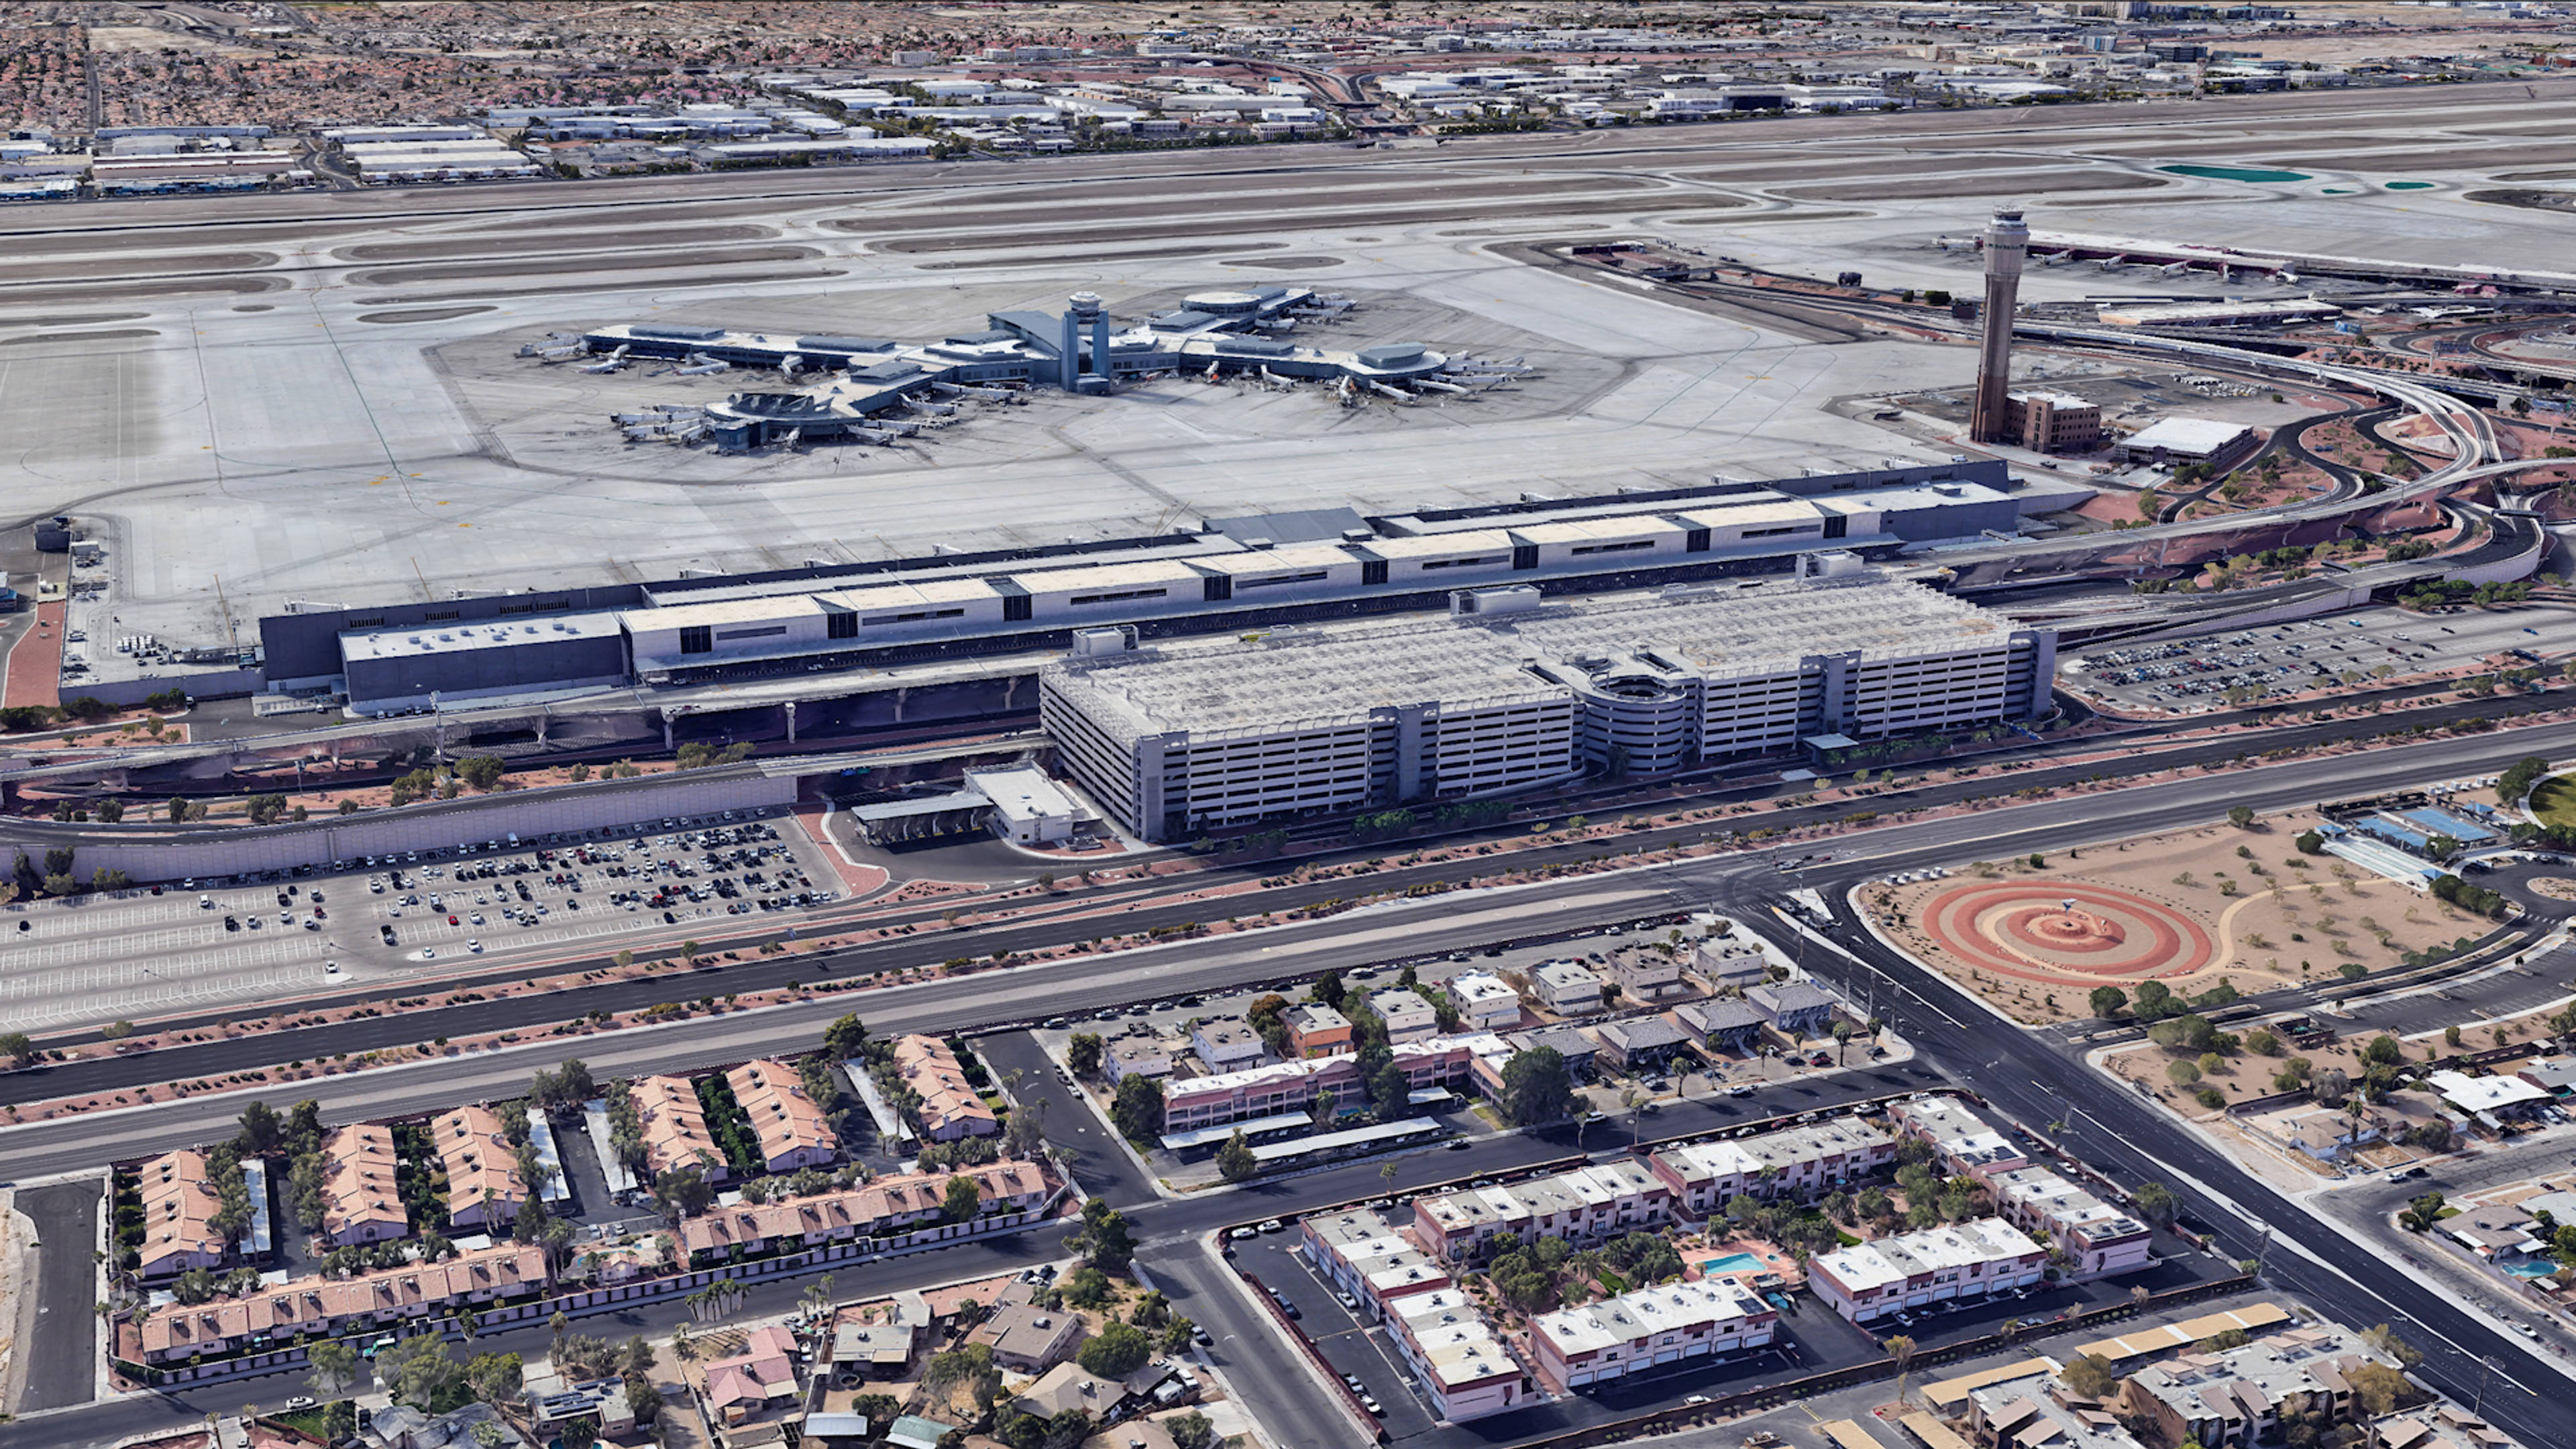  Aerial View of Las Vegas Airport Parking